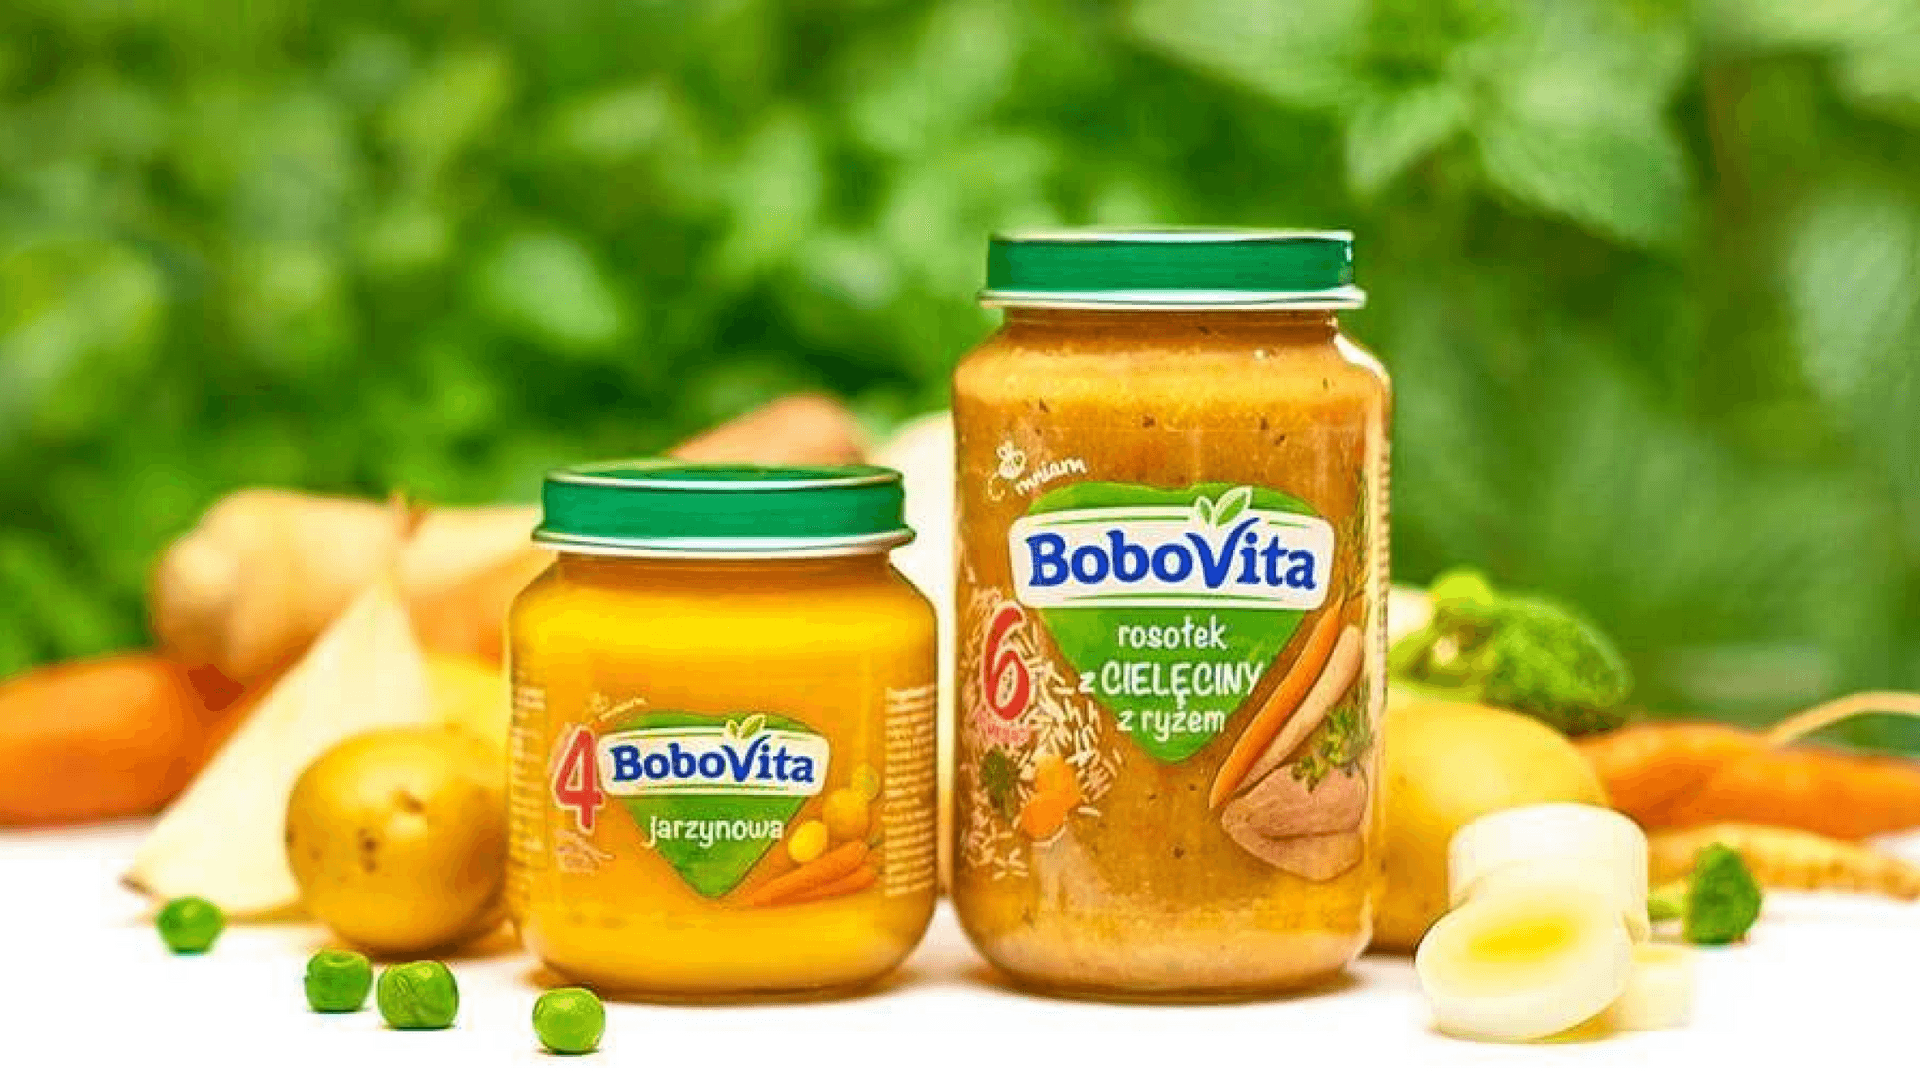 BoboVita-Produkty-Obiadki.png